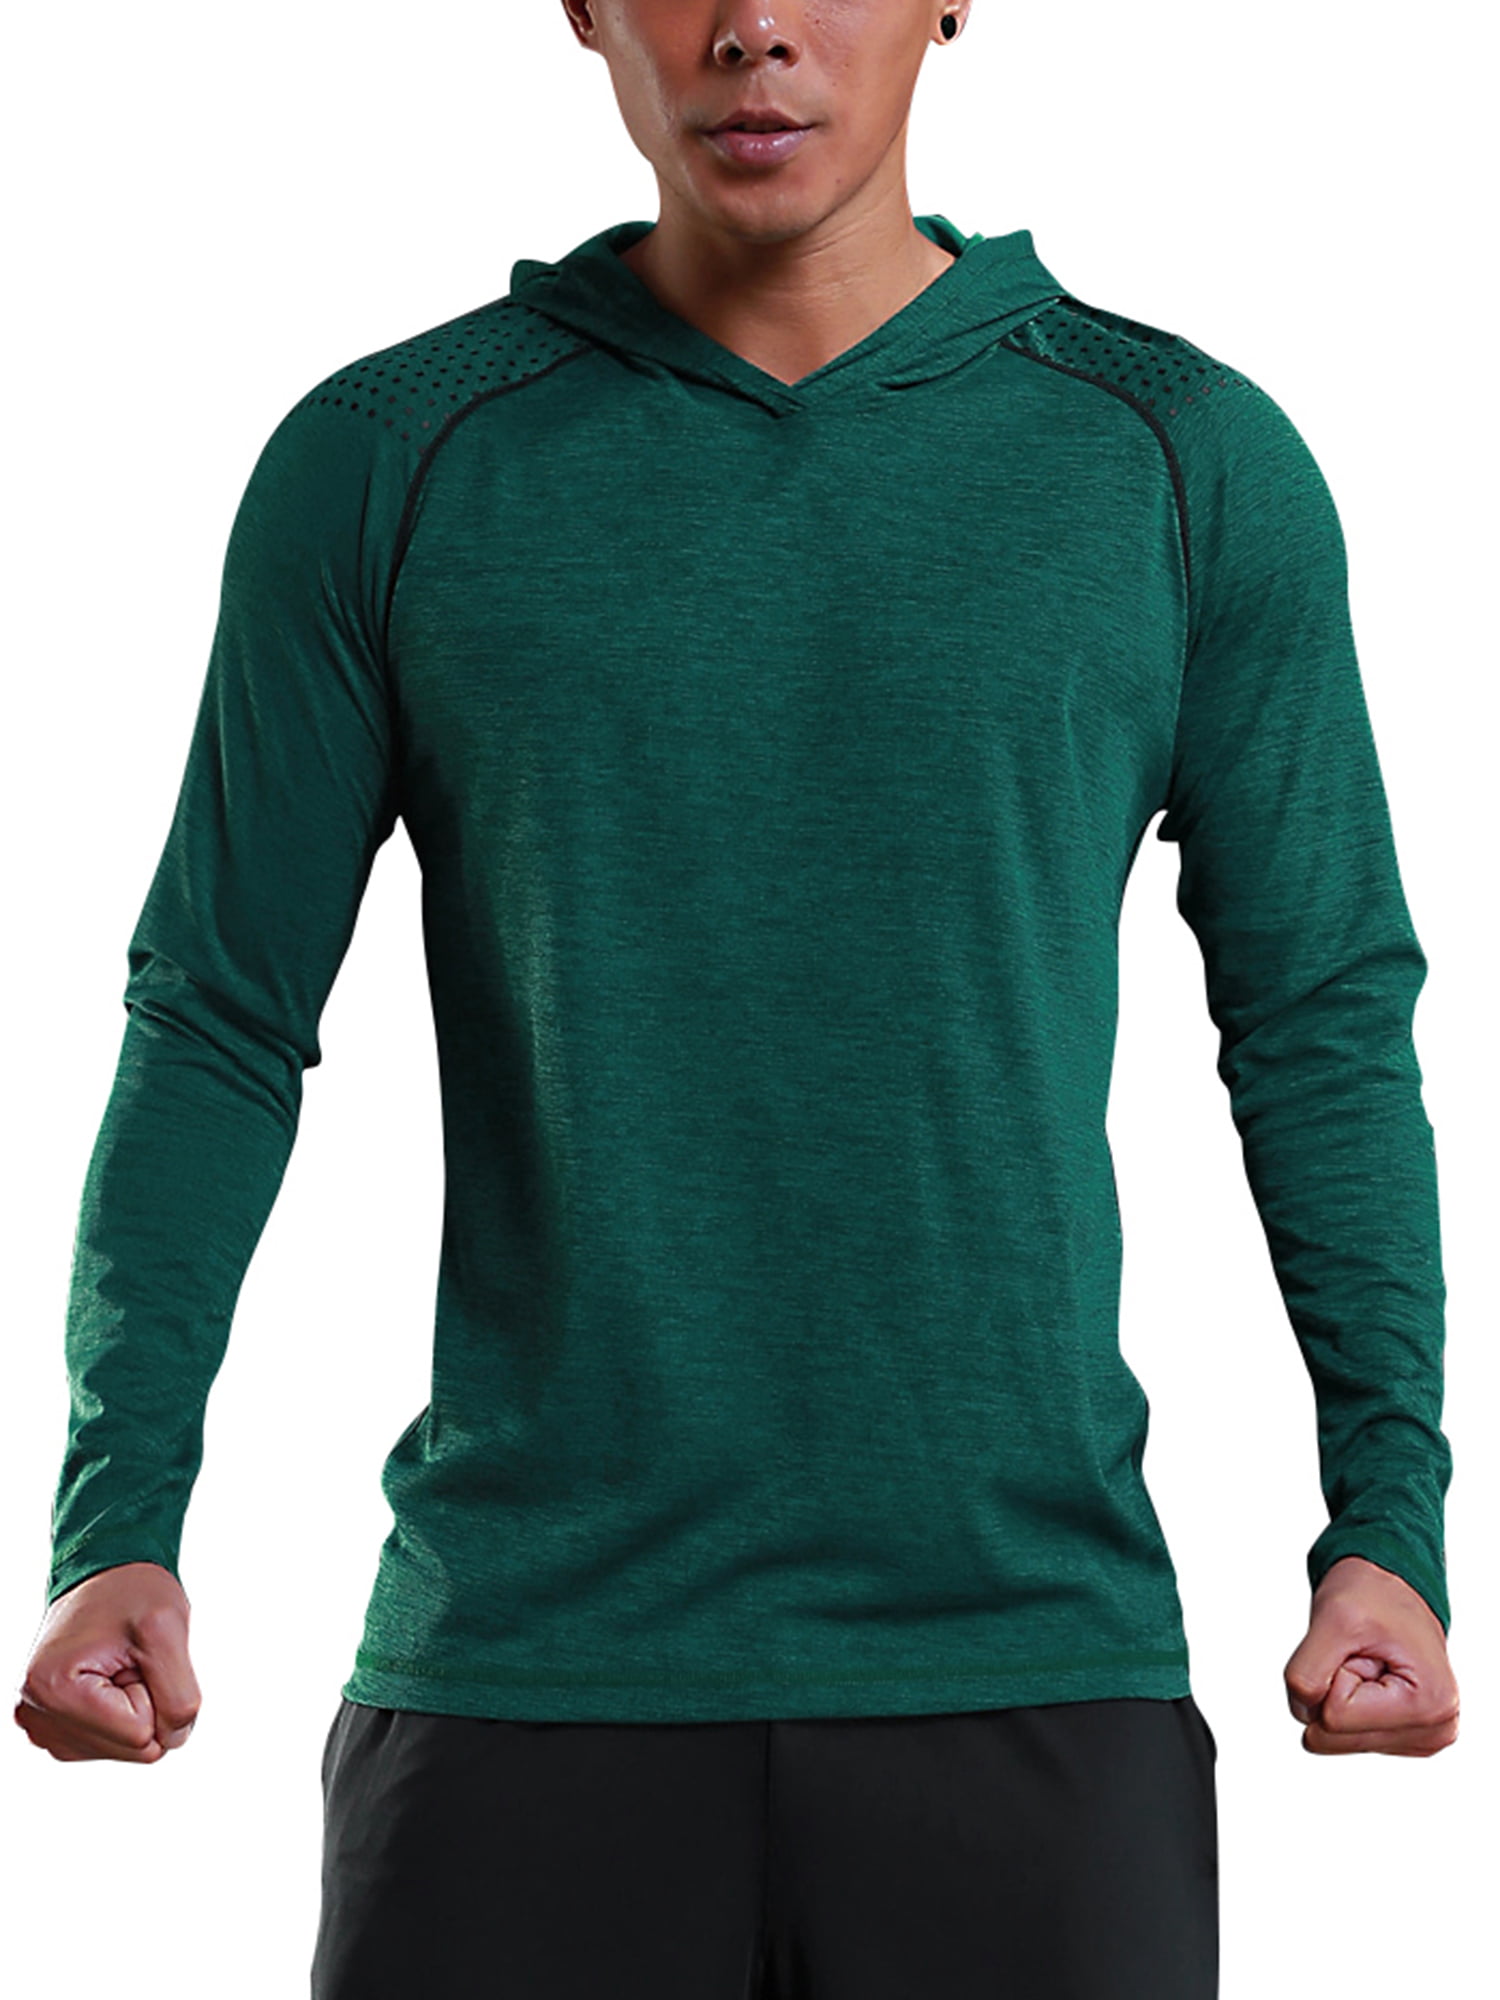 Active Performance Hooded Pullover T-Shirts Lightweight Sports Sweatshirt TSLA Men's Long Sleeve Running Hoodie 